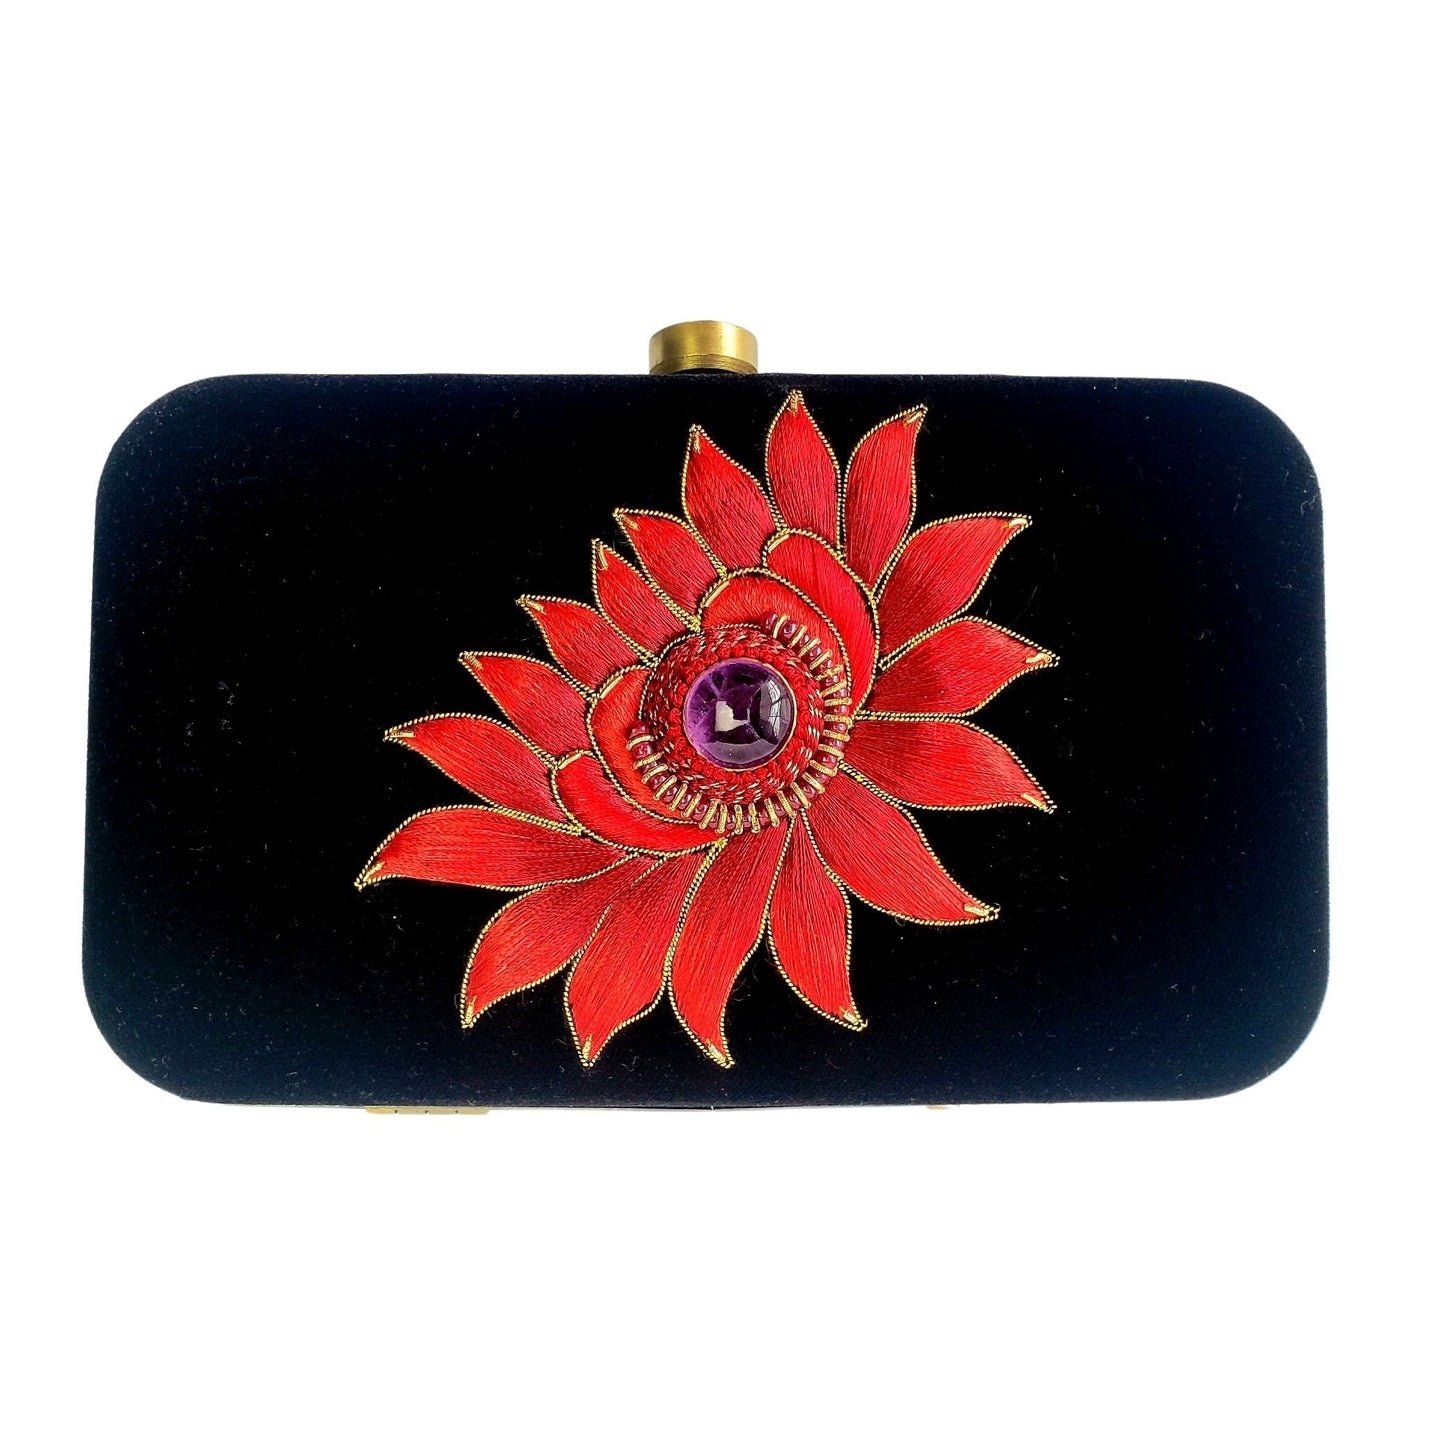 Black velvet hard case clutch with red flower and amethyst gemstone, BoutiqueByMariam. 